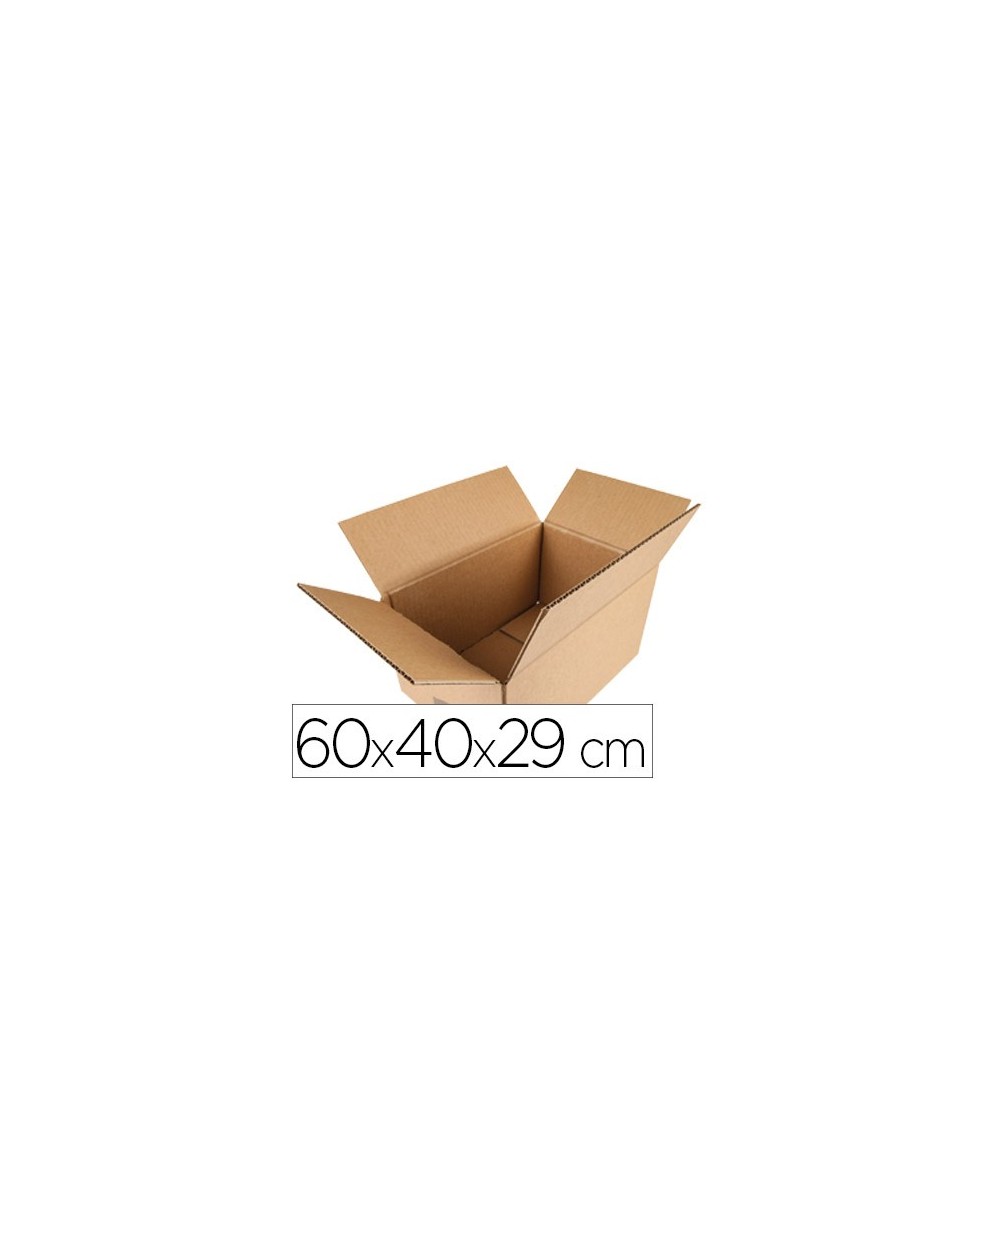 Caja para embalar q connect americana medidas 600x400x290 mm espesor carton 5 mm